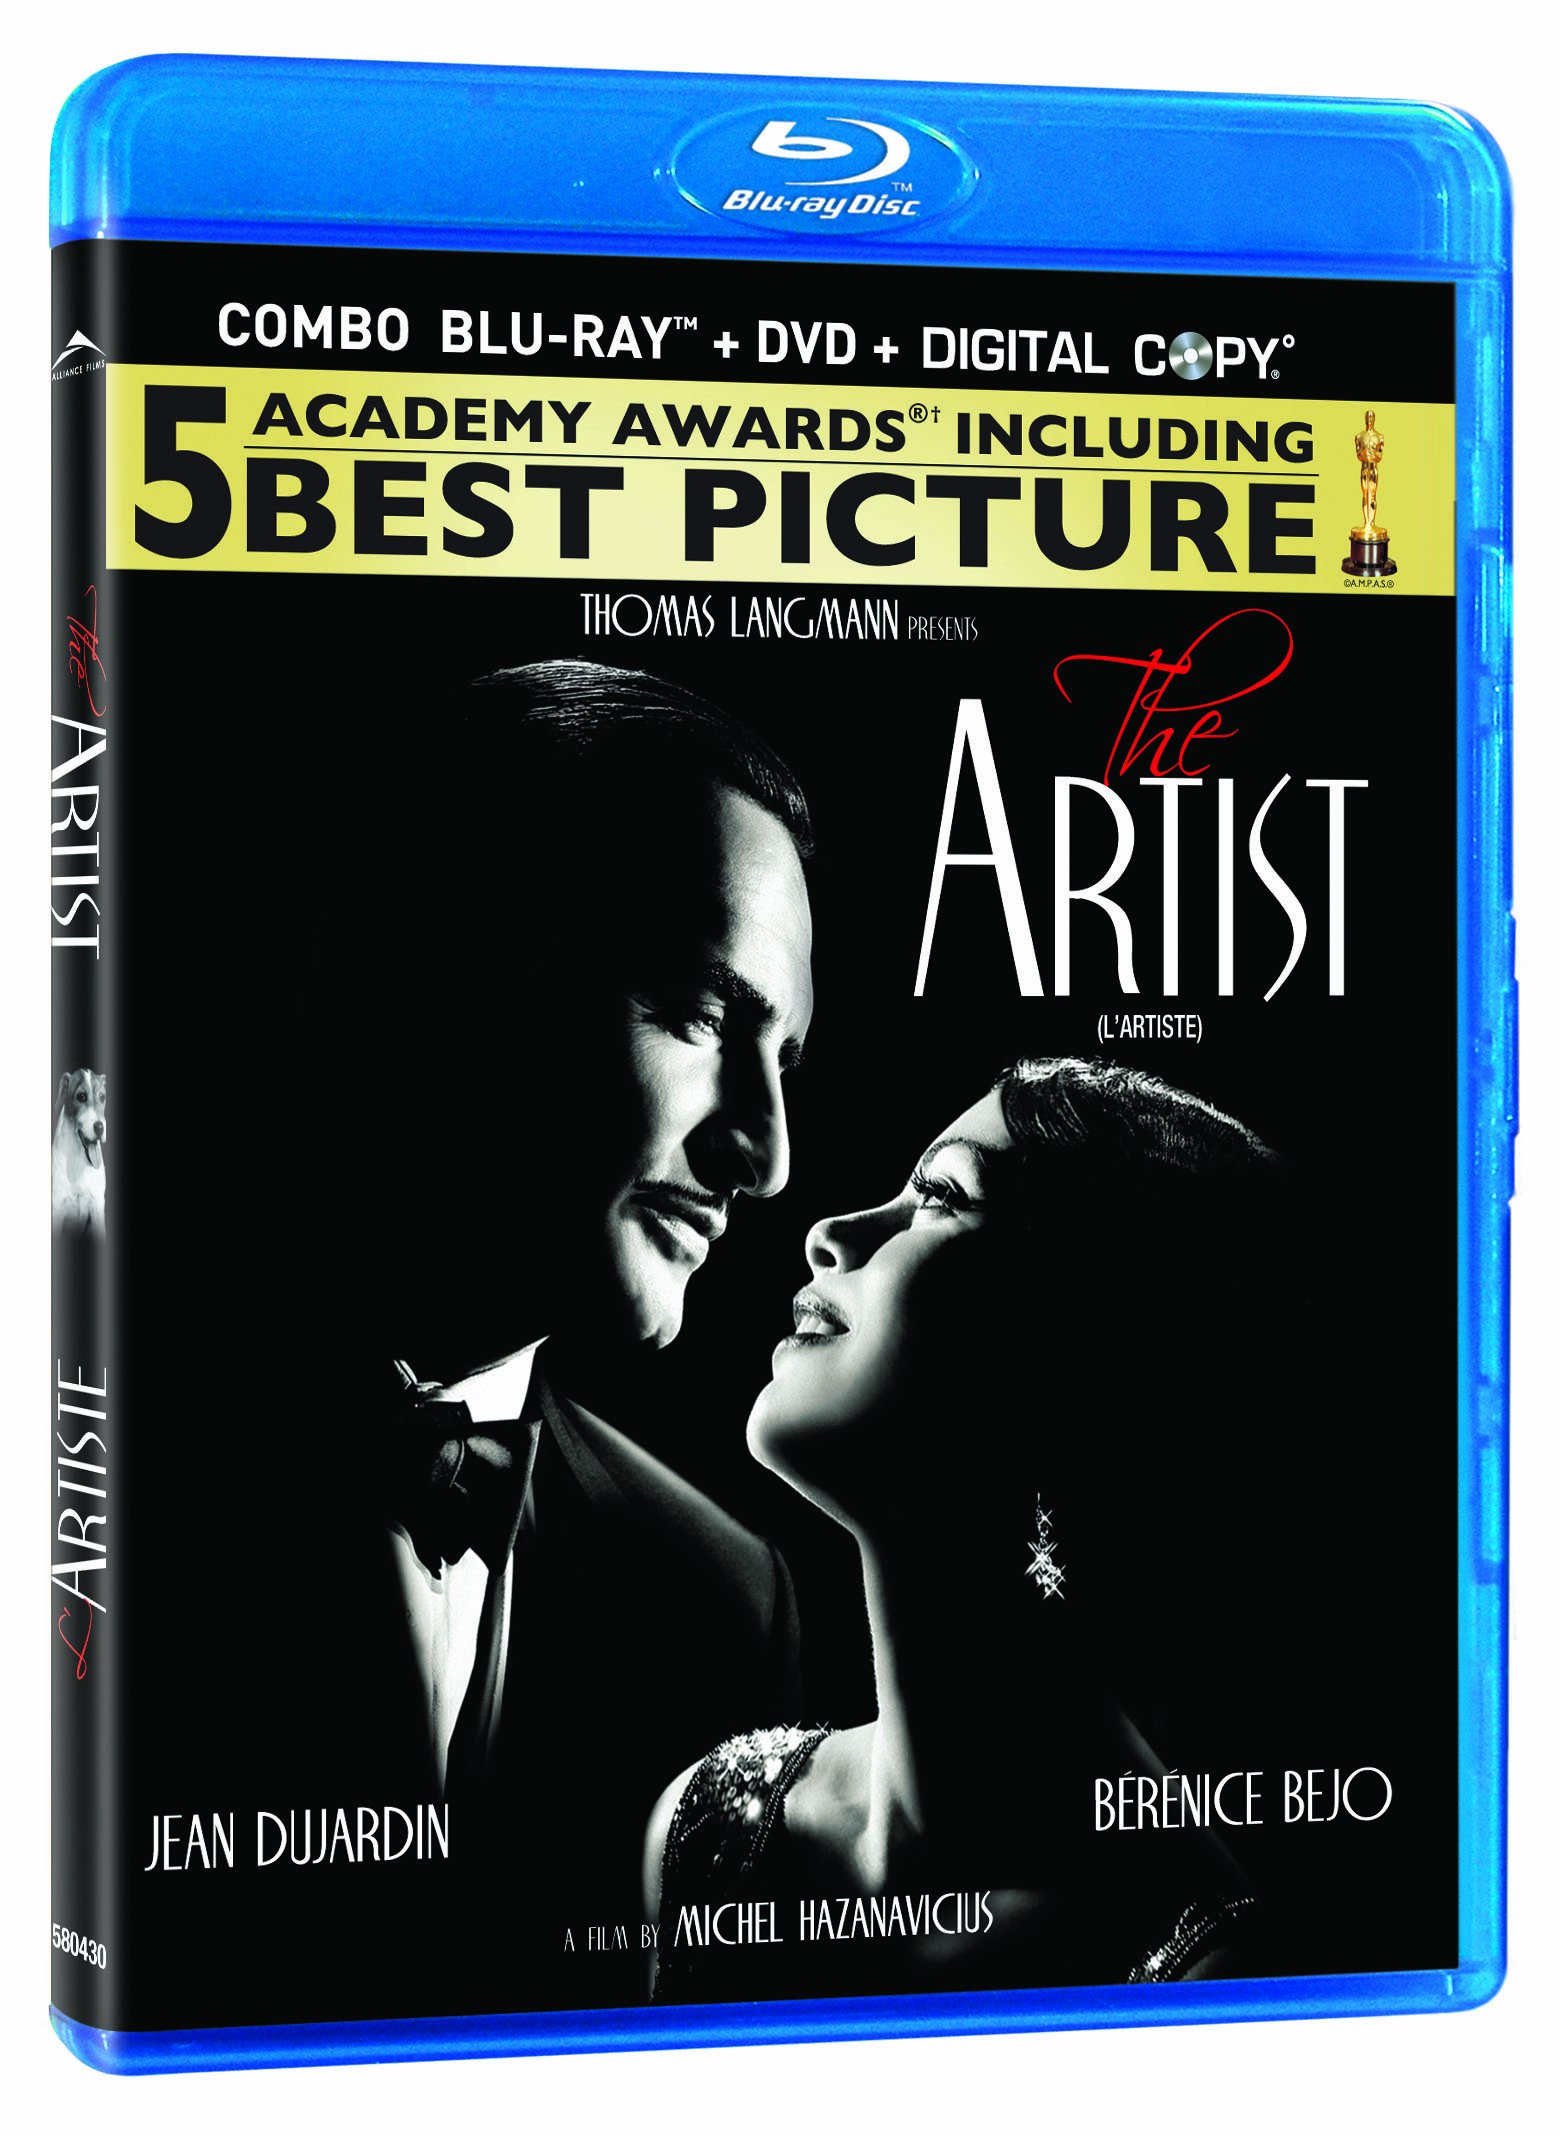 The Artist (Bilingual) [Blu-ray + DVD + Digital Copy] (Sous-titres français) on MovieShack